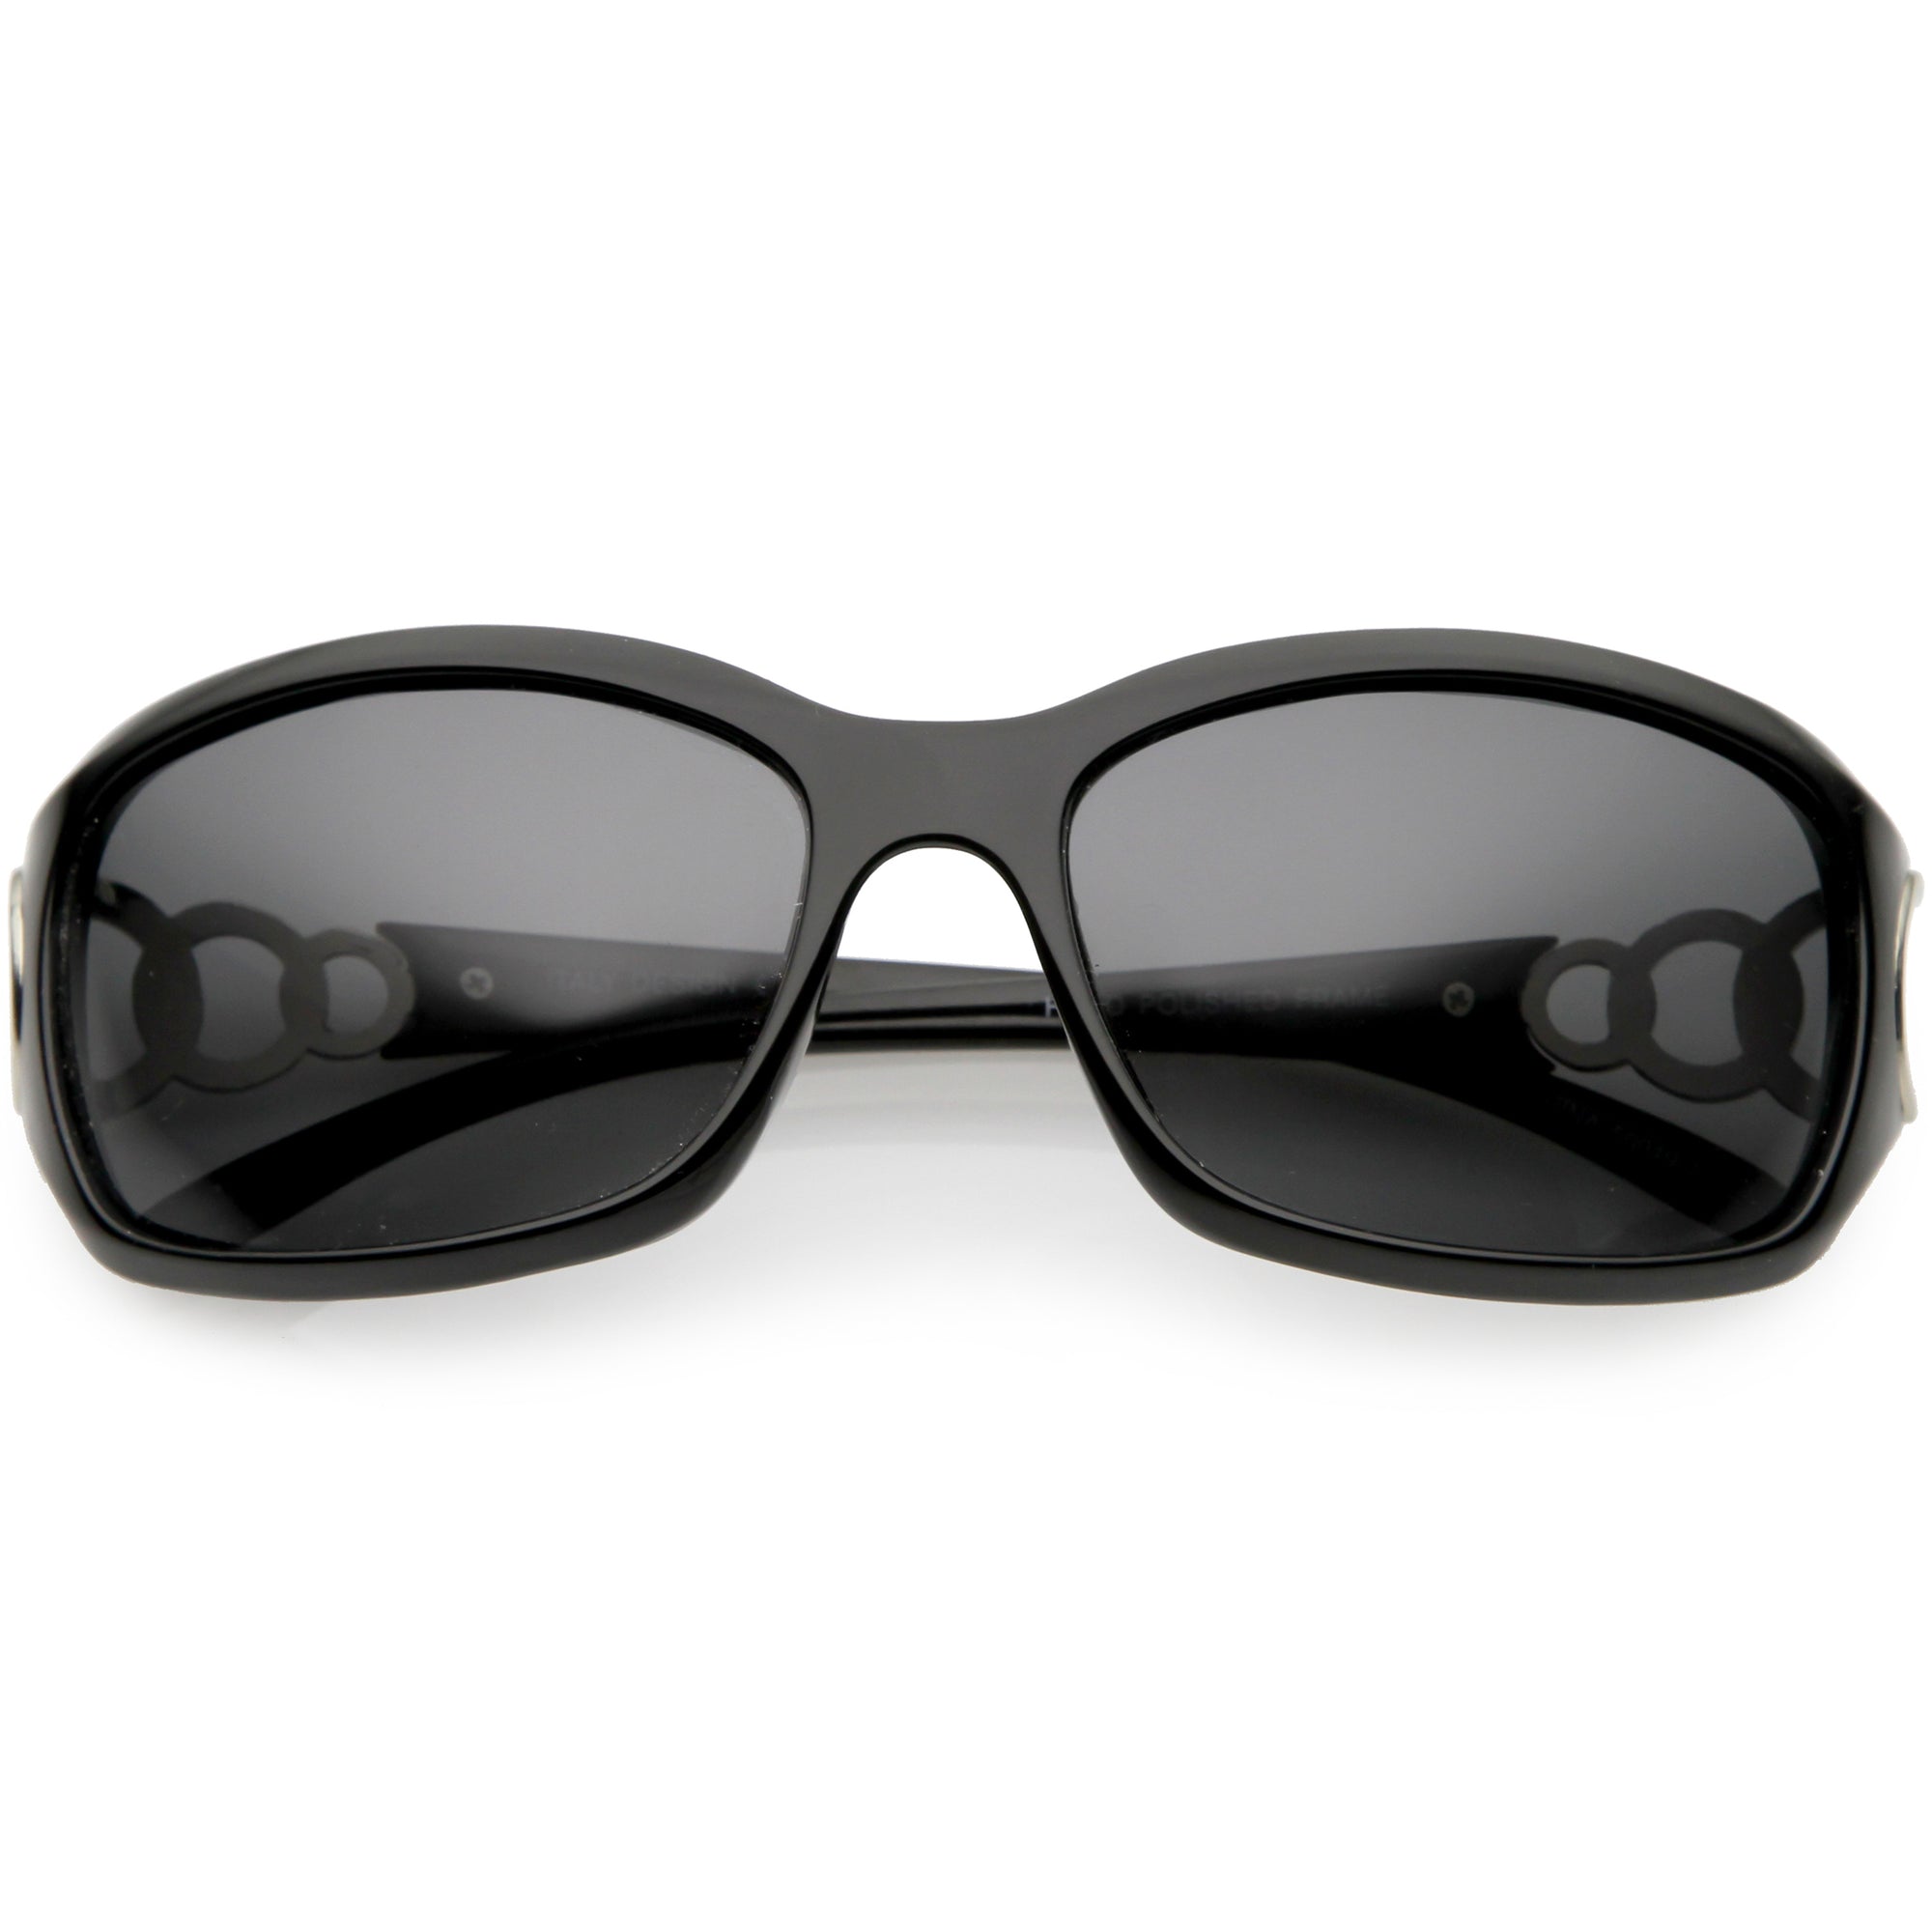 Designer Inspired Metal Chain Arm Block Sunglasses - zeroUV